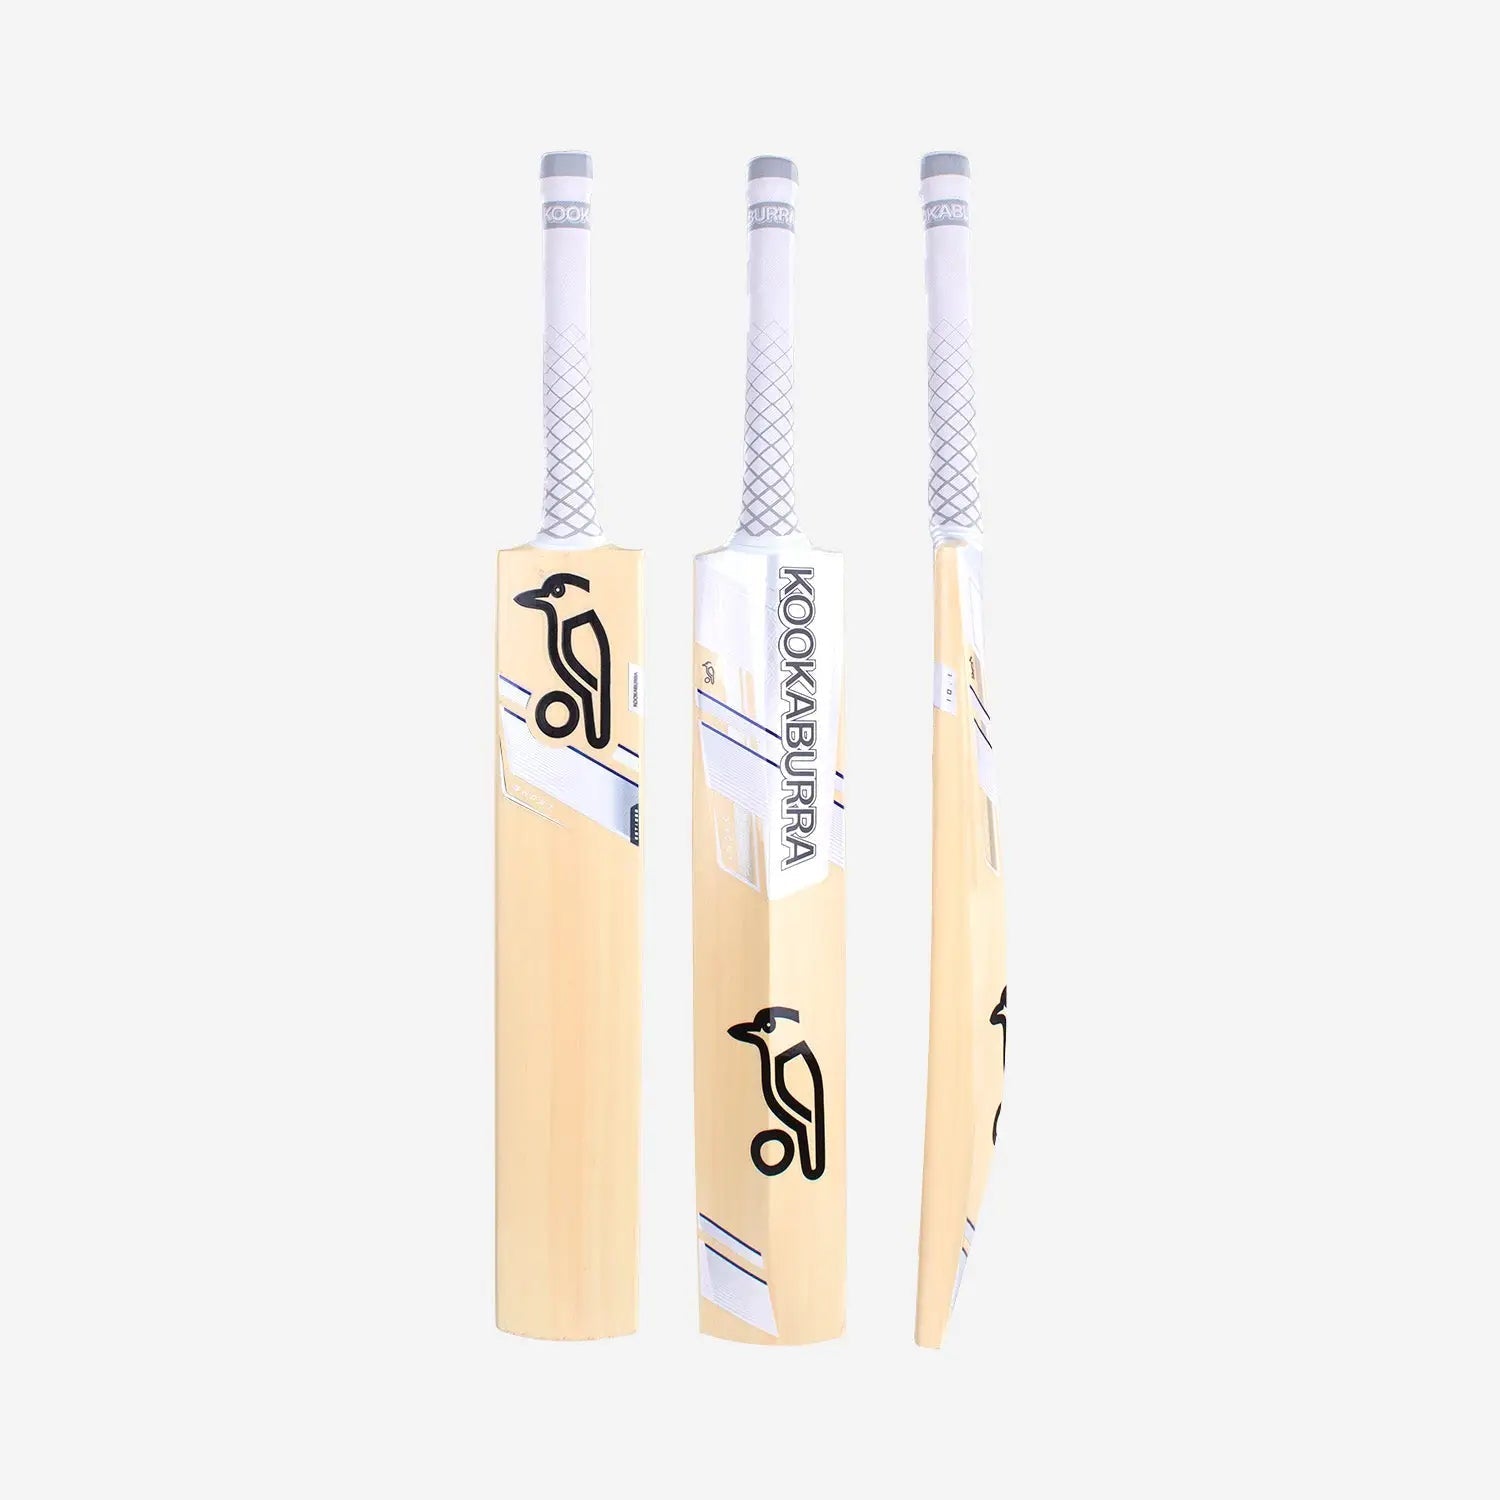 Heavy Tennis Ball Cricket Bat - Sharp Shooter by Cricket Equipment